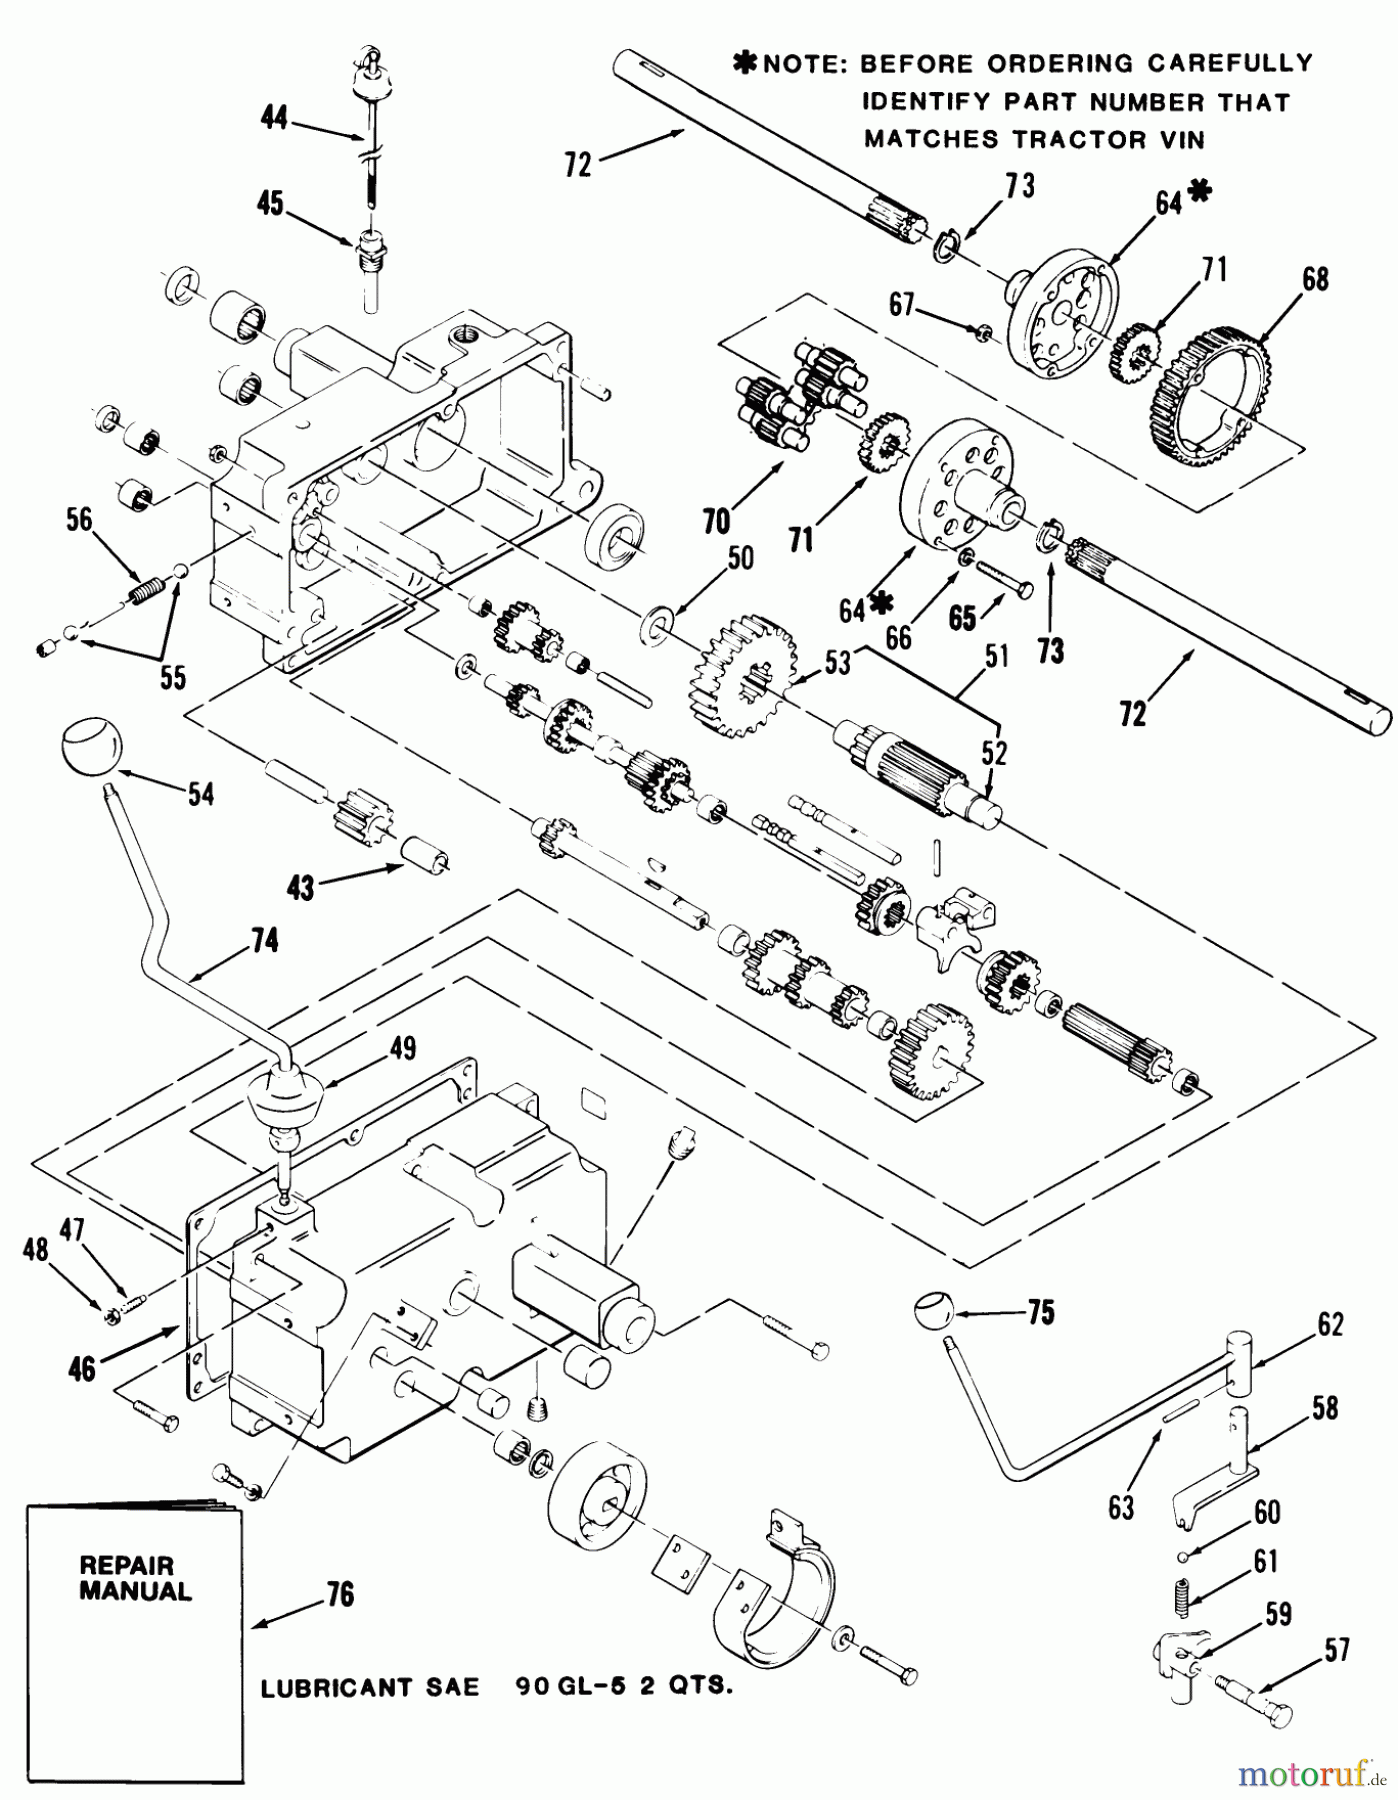  Toro Neu Mowers, Lawn & Garden Tractor Seite 1 31-17KE02 (417-A) - Toro 417-A Garden Tractor, 1986 MECHANICAL TRANSMISSION-8-SPEED #2